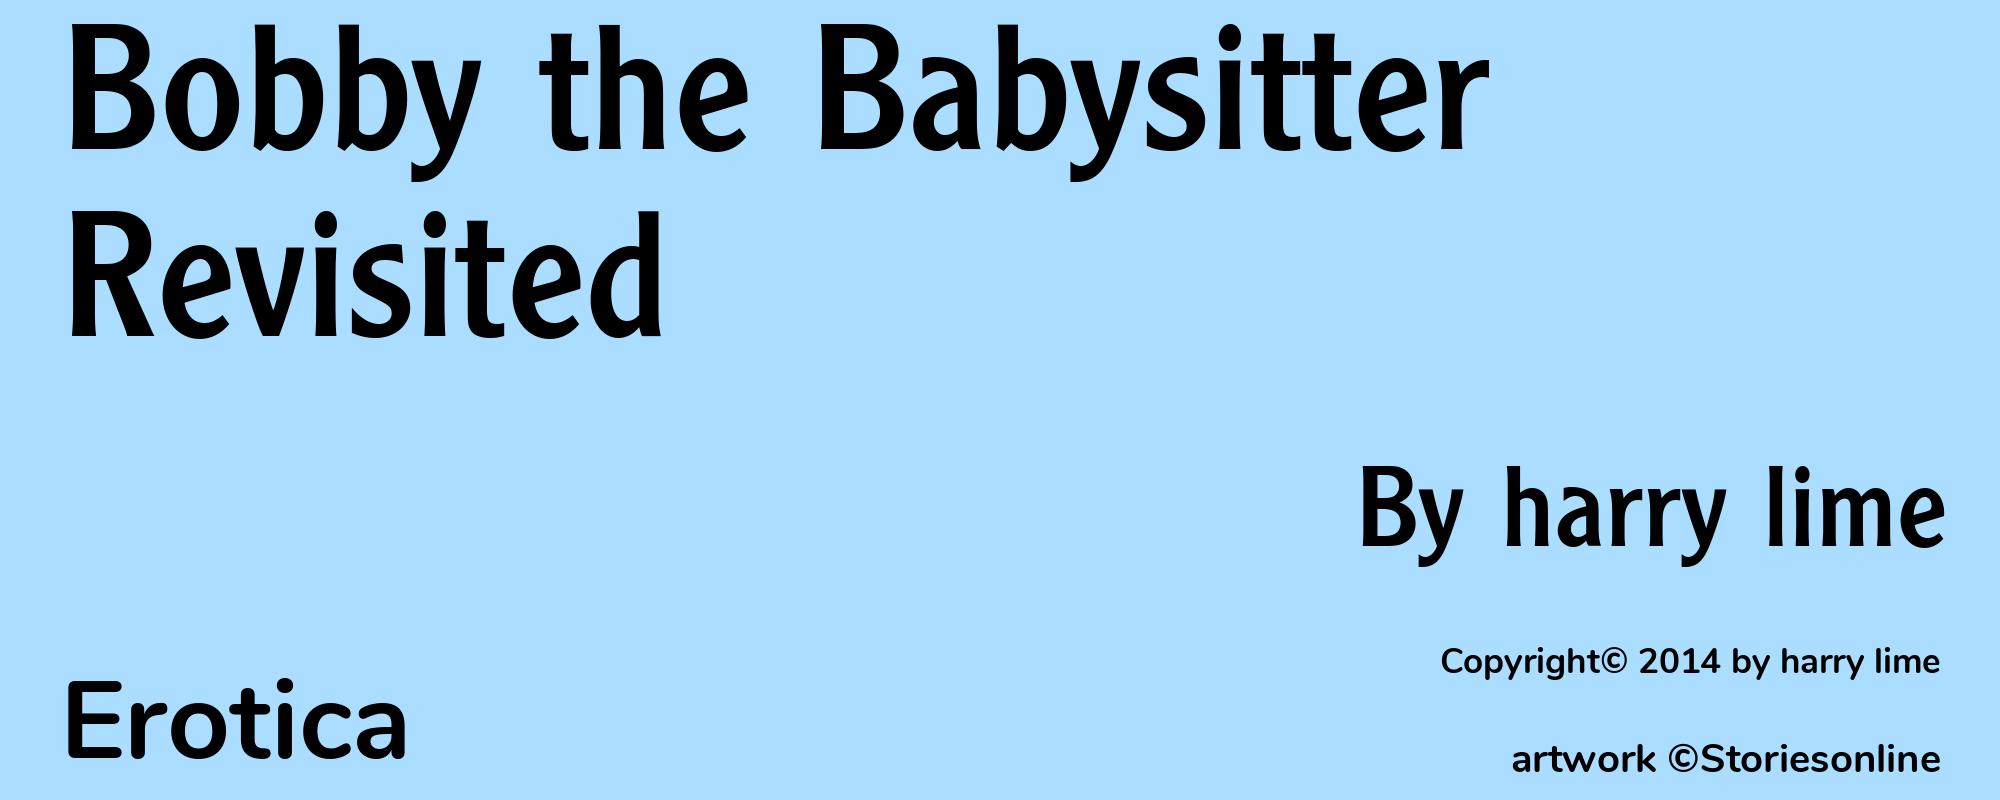 Bobby the Babysitter Revisited - Cover